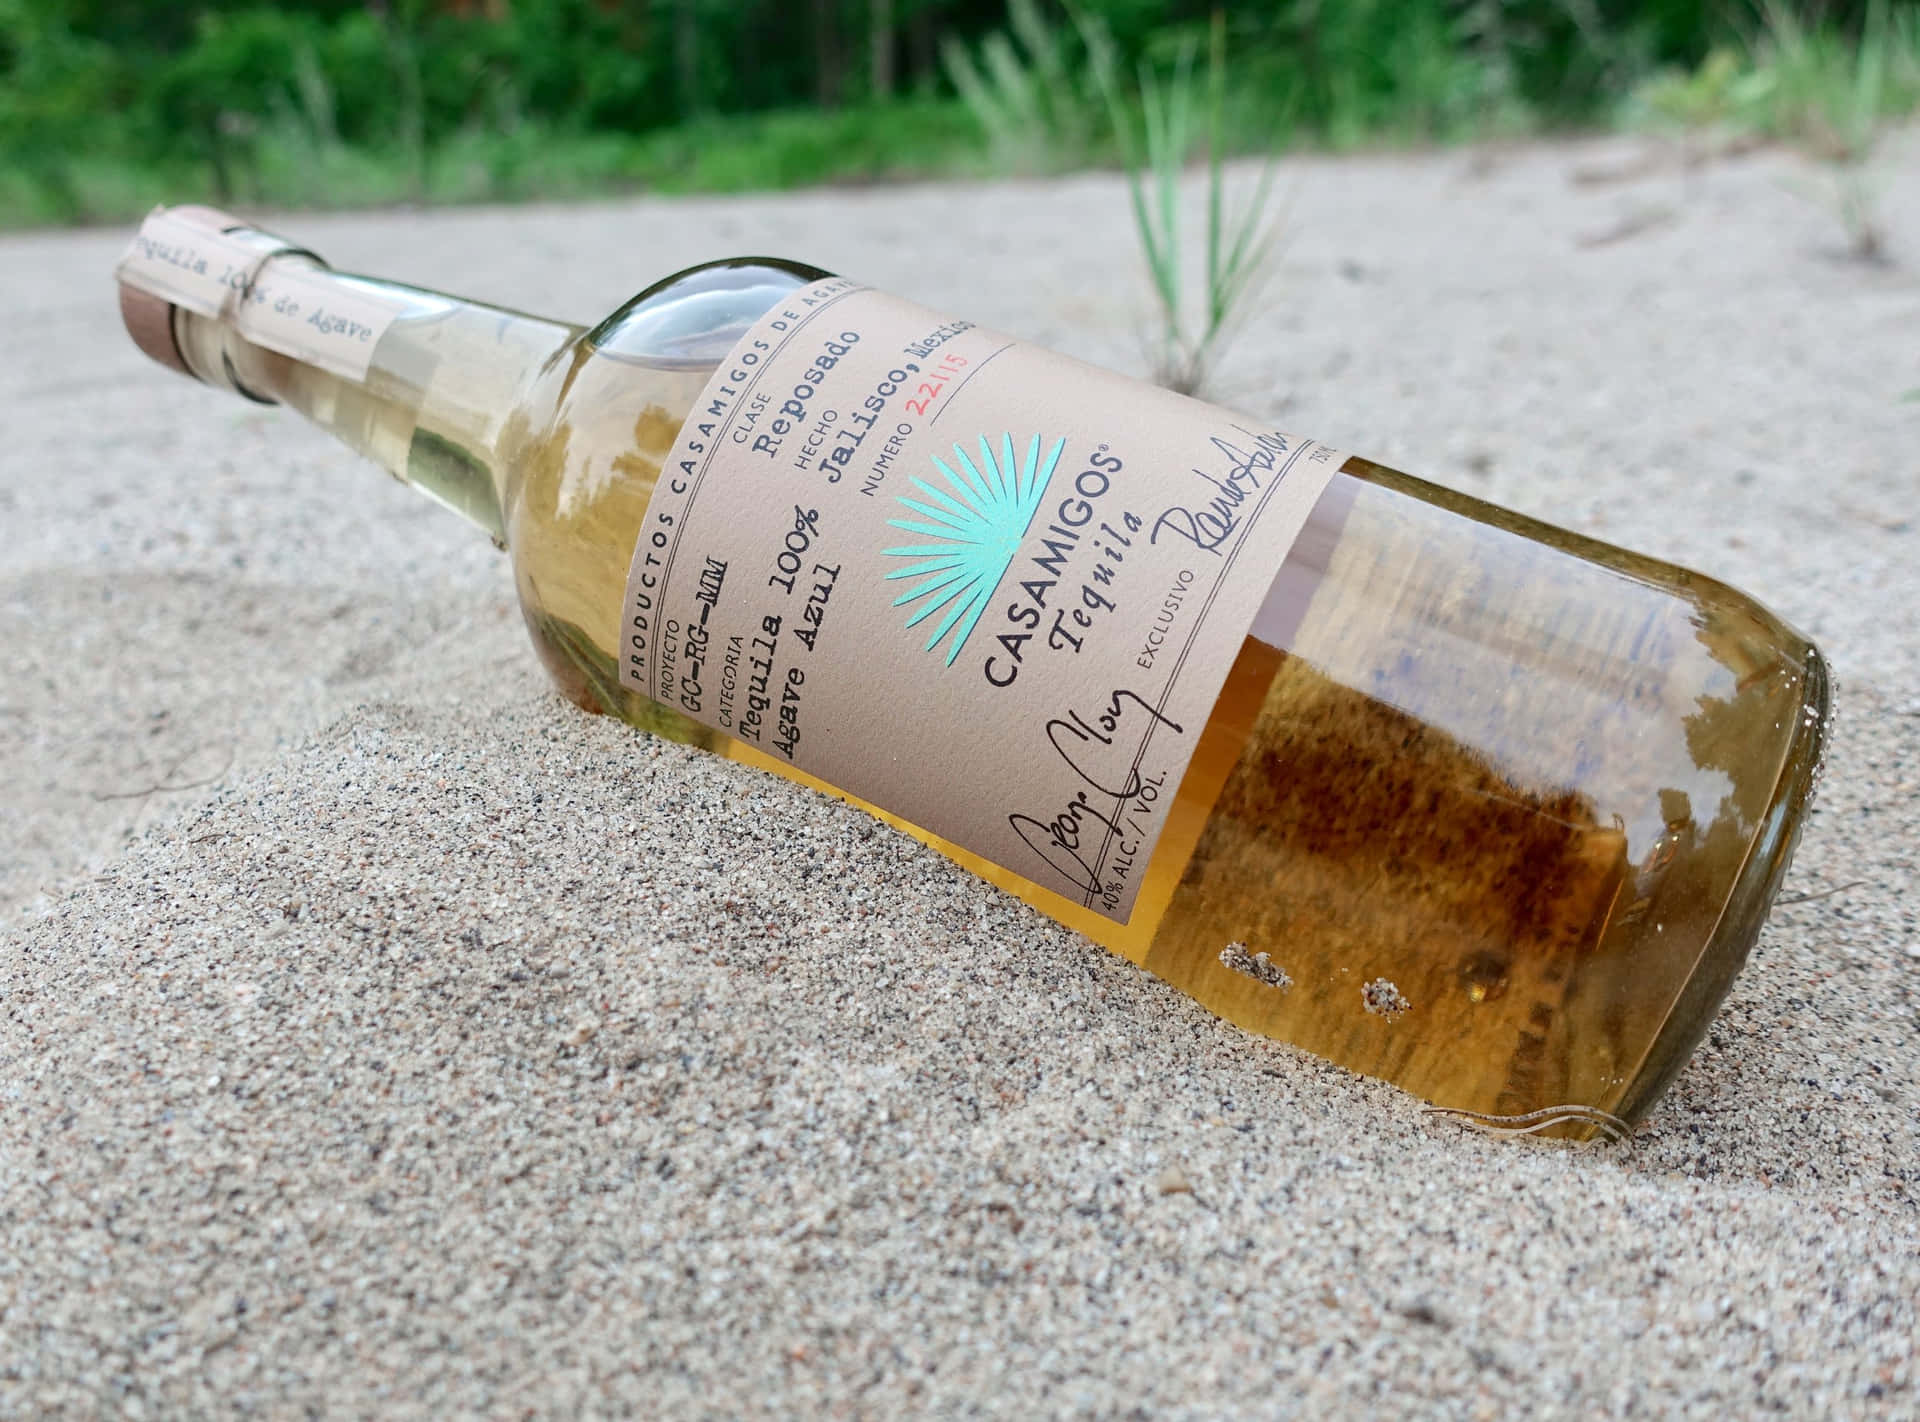 Casamigos Tequila Reposado Liquor Bottle On Sand Picture